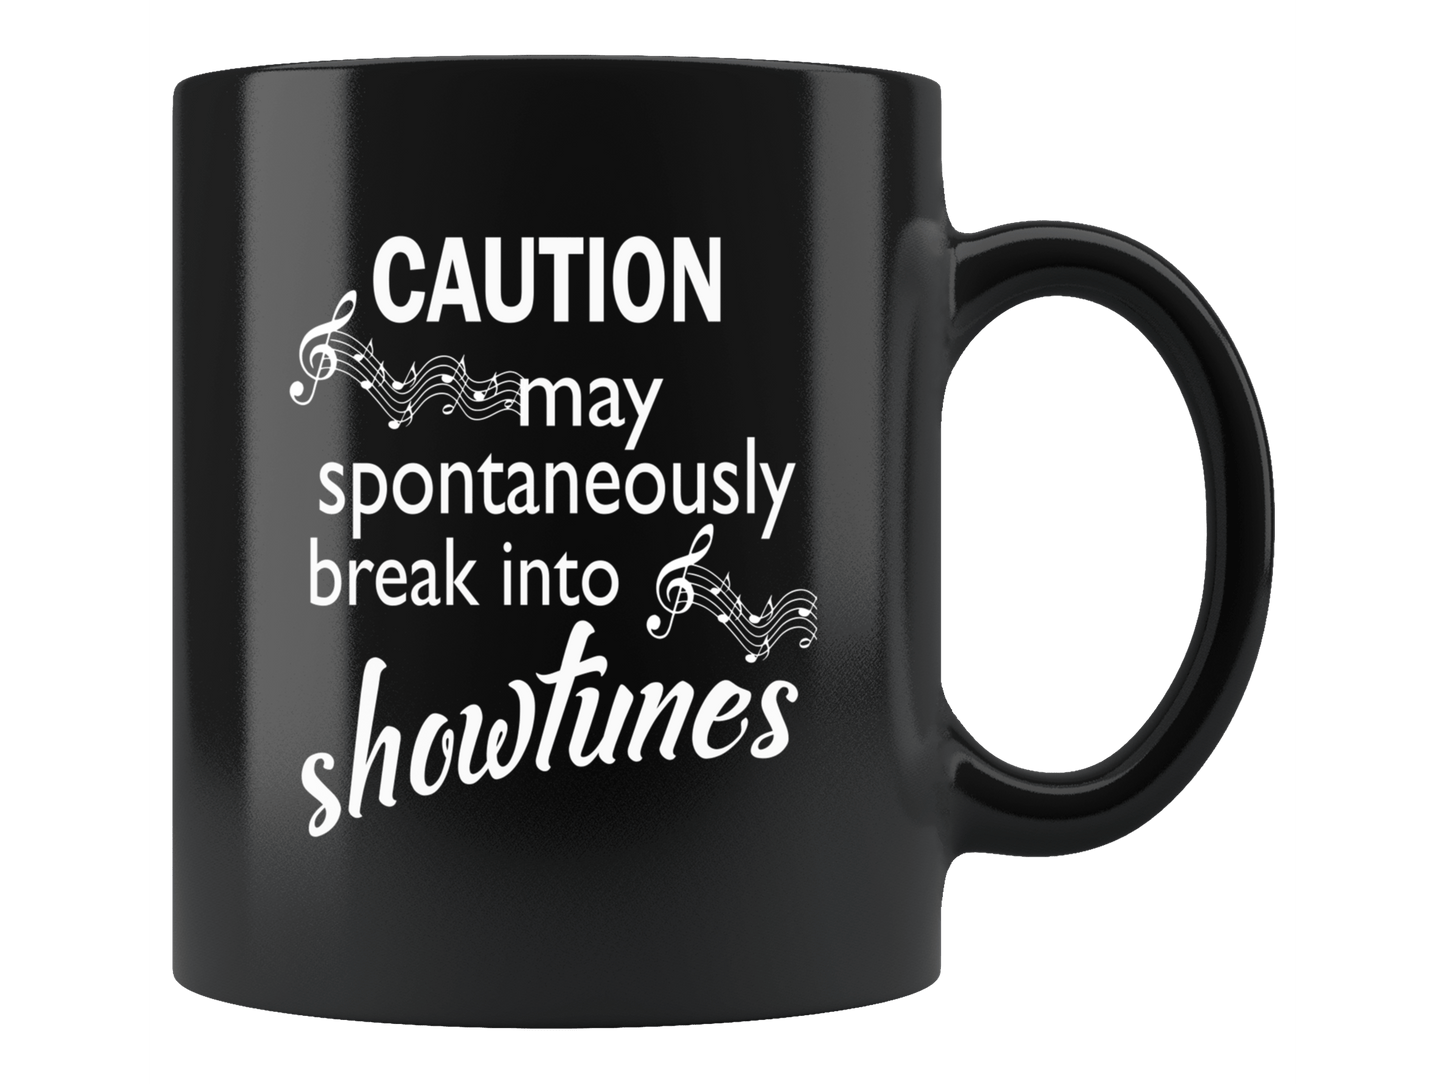 Funny Showtunes Fan Mug Gift - Caution May Spontaneously Break Into Showtunes